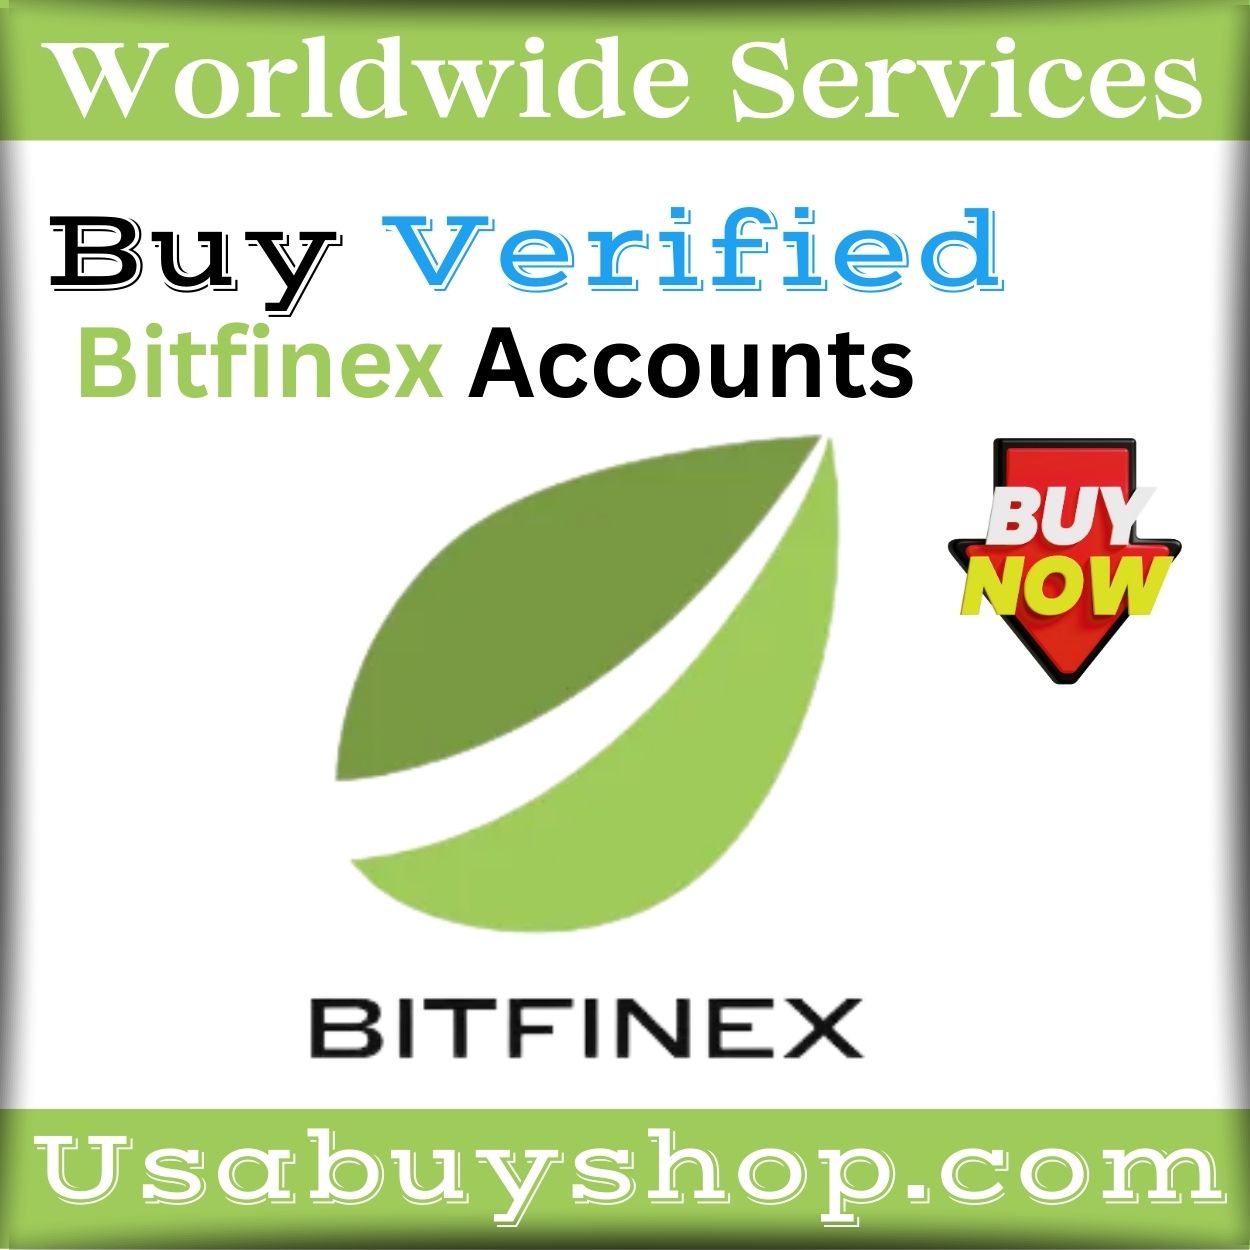 Buy Verified Bitfinex Accounts - 100% KYC verified accounts